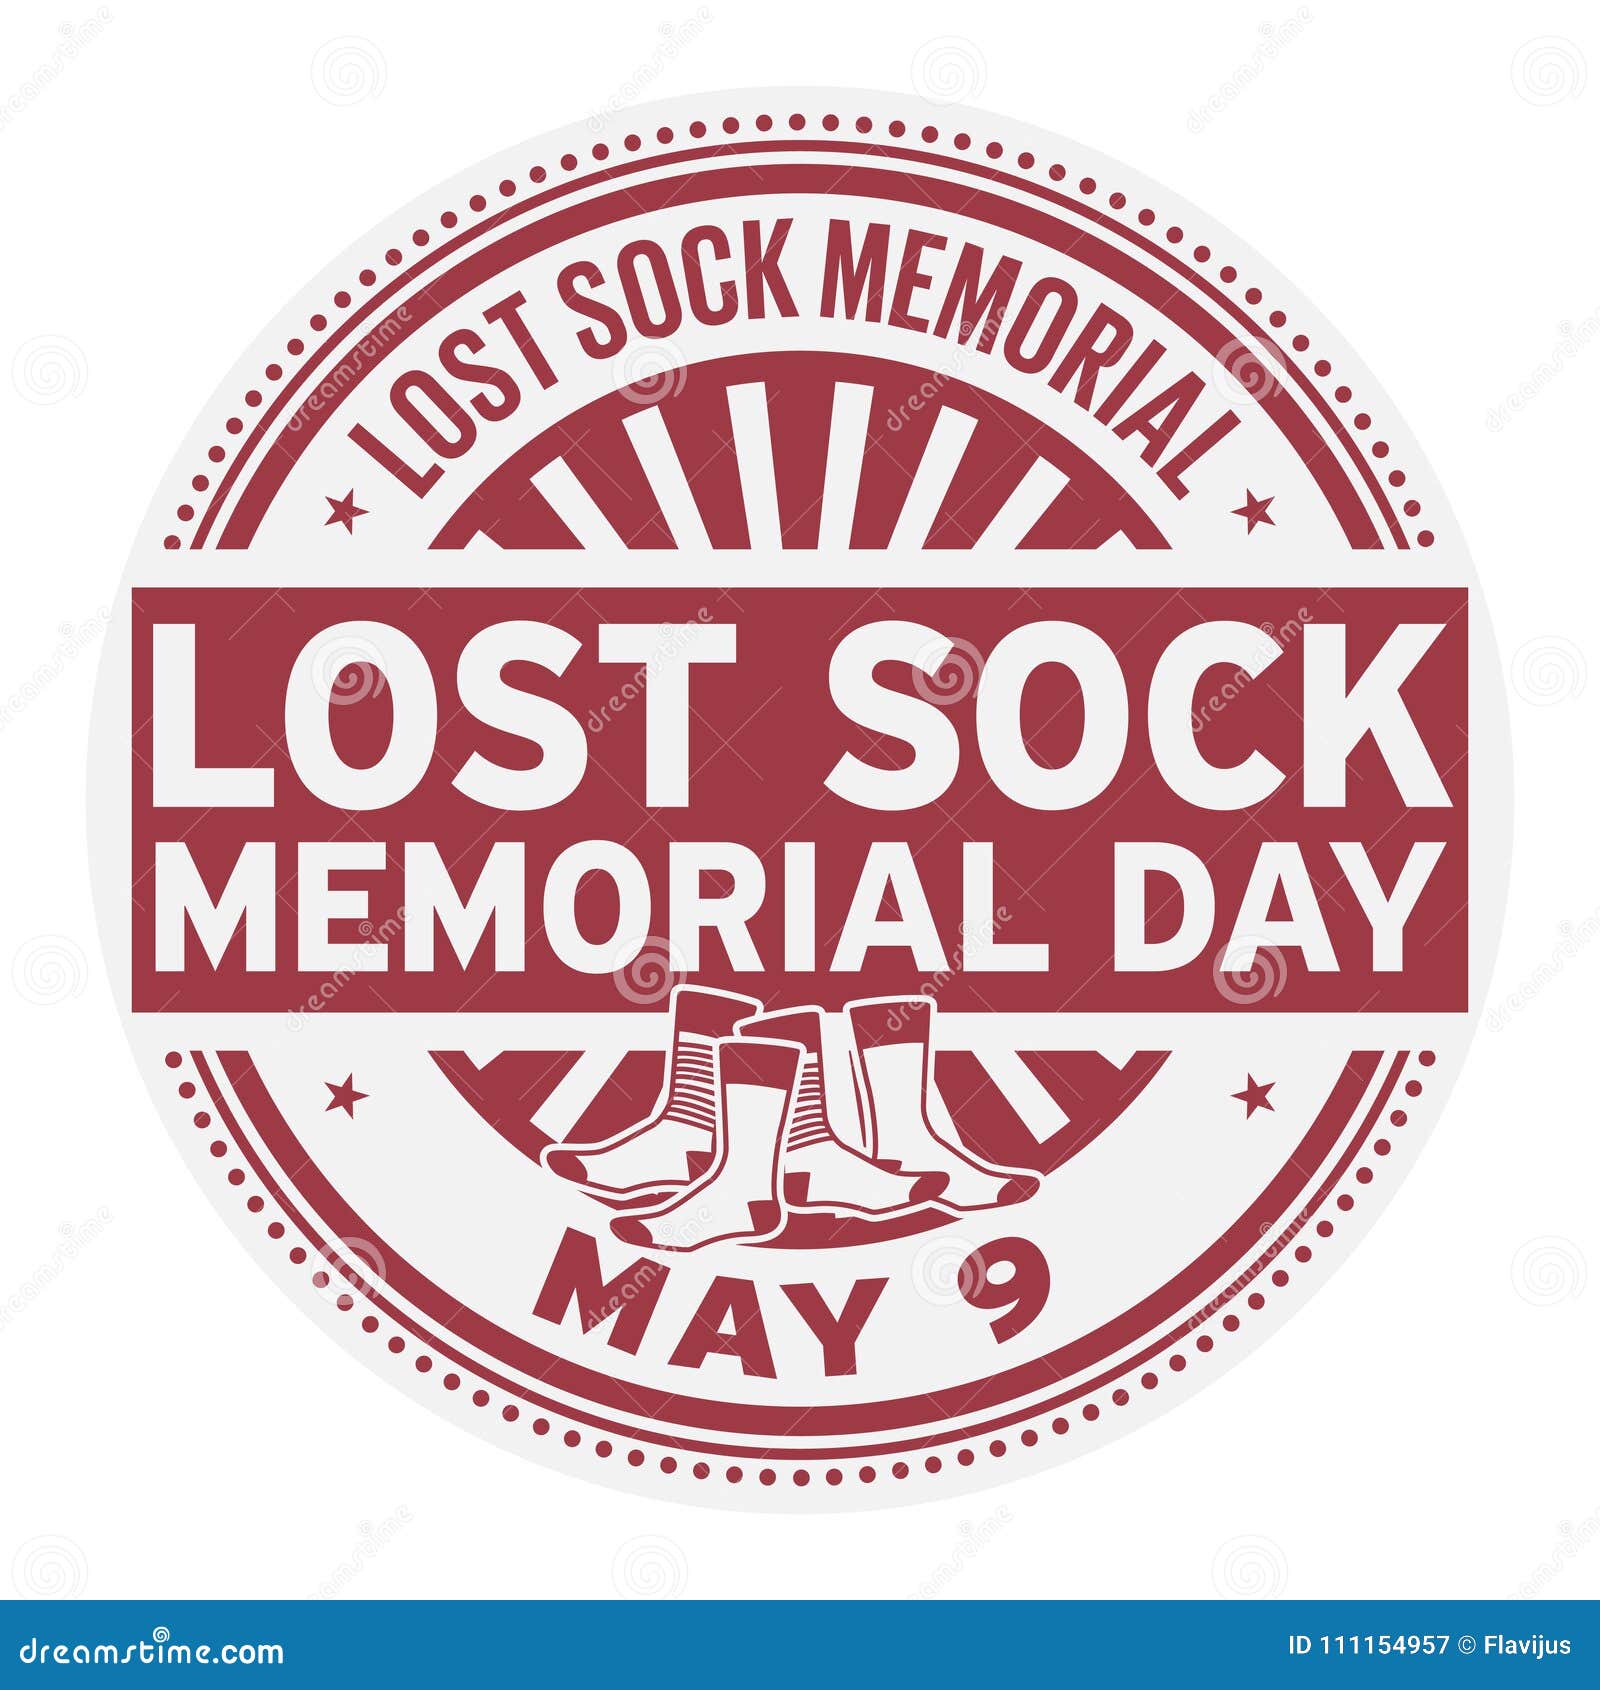 Lost Sock Memorial Day Stamp Stock Vector - Illustration of logo ...